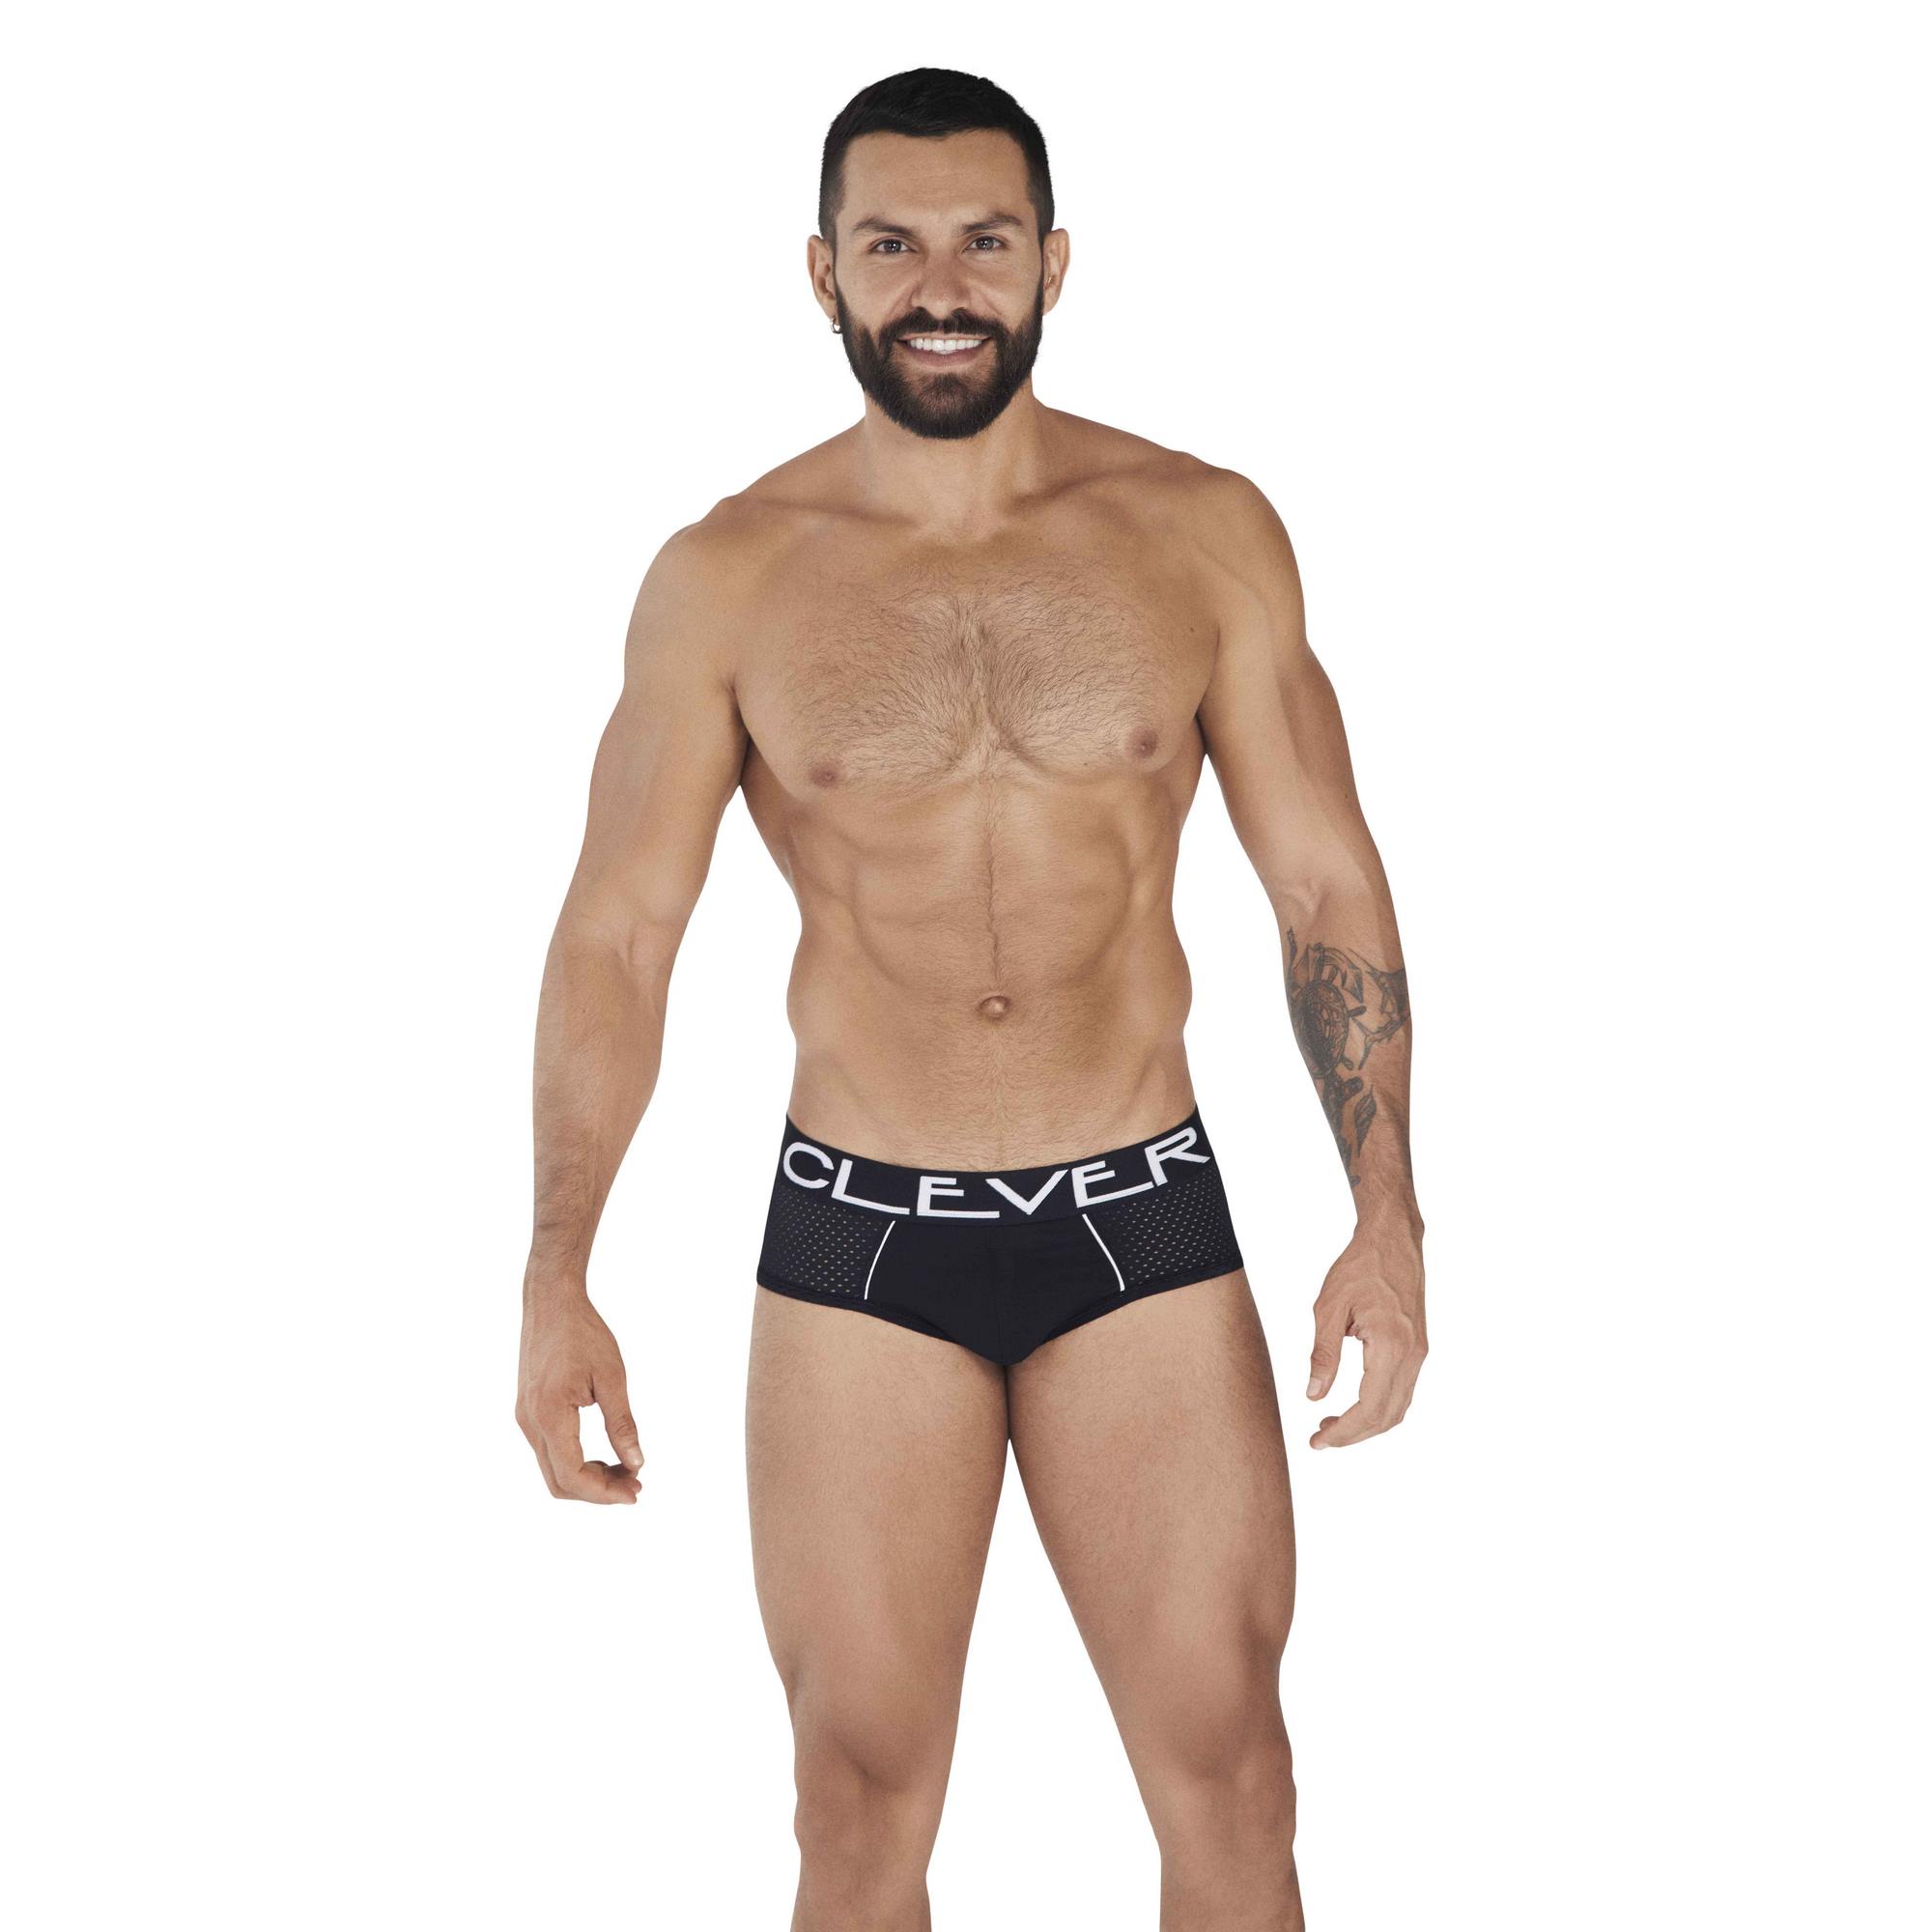 Трусы мужские Clever Masculine Underwear 0362 черные L